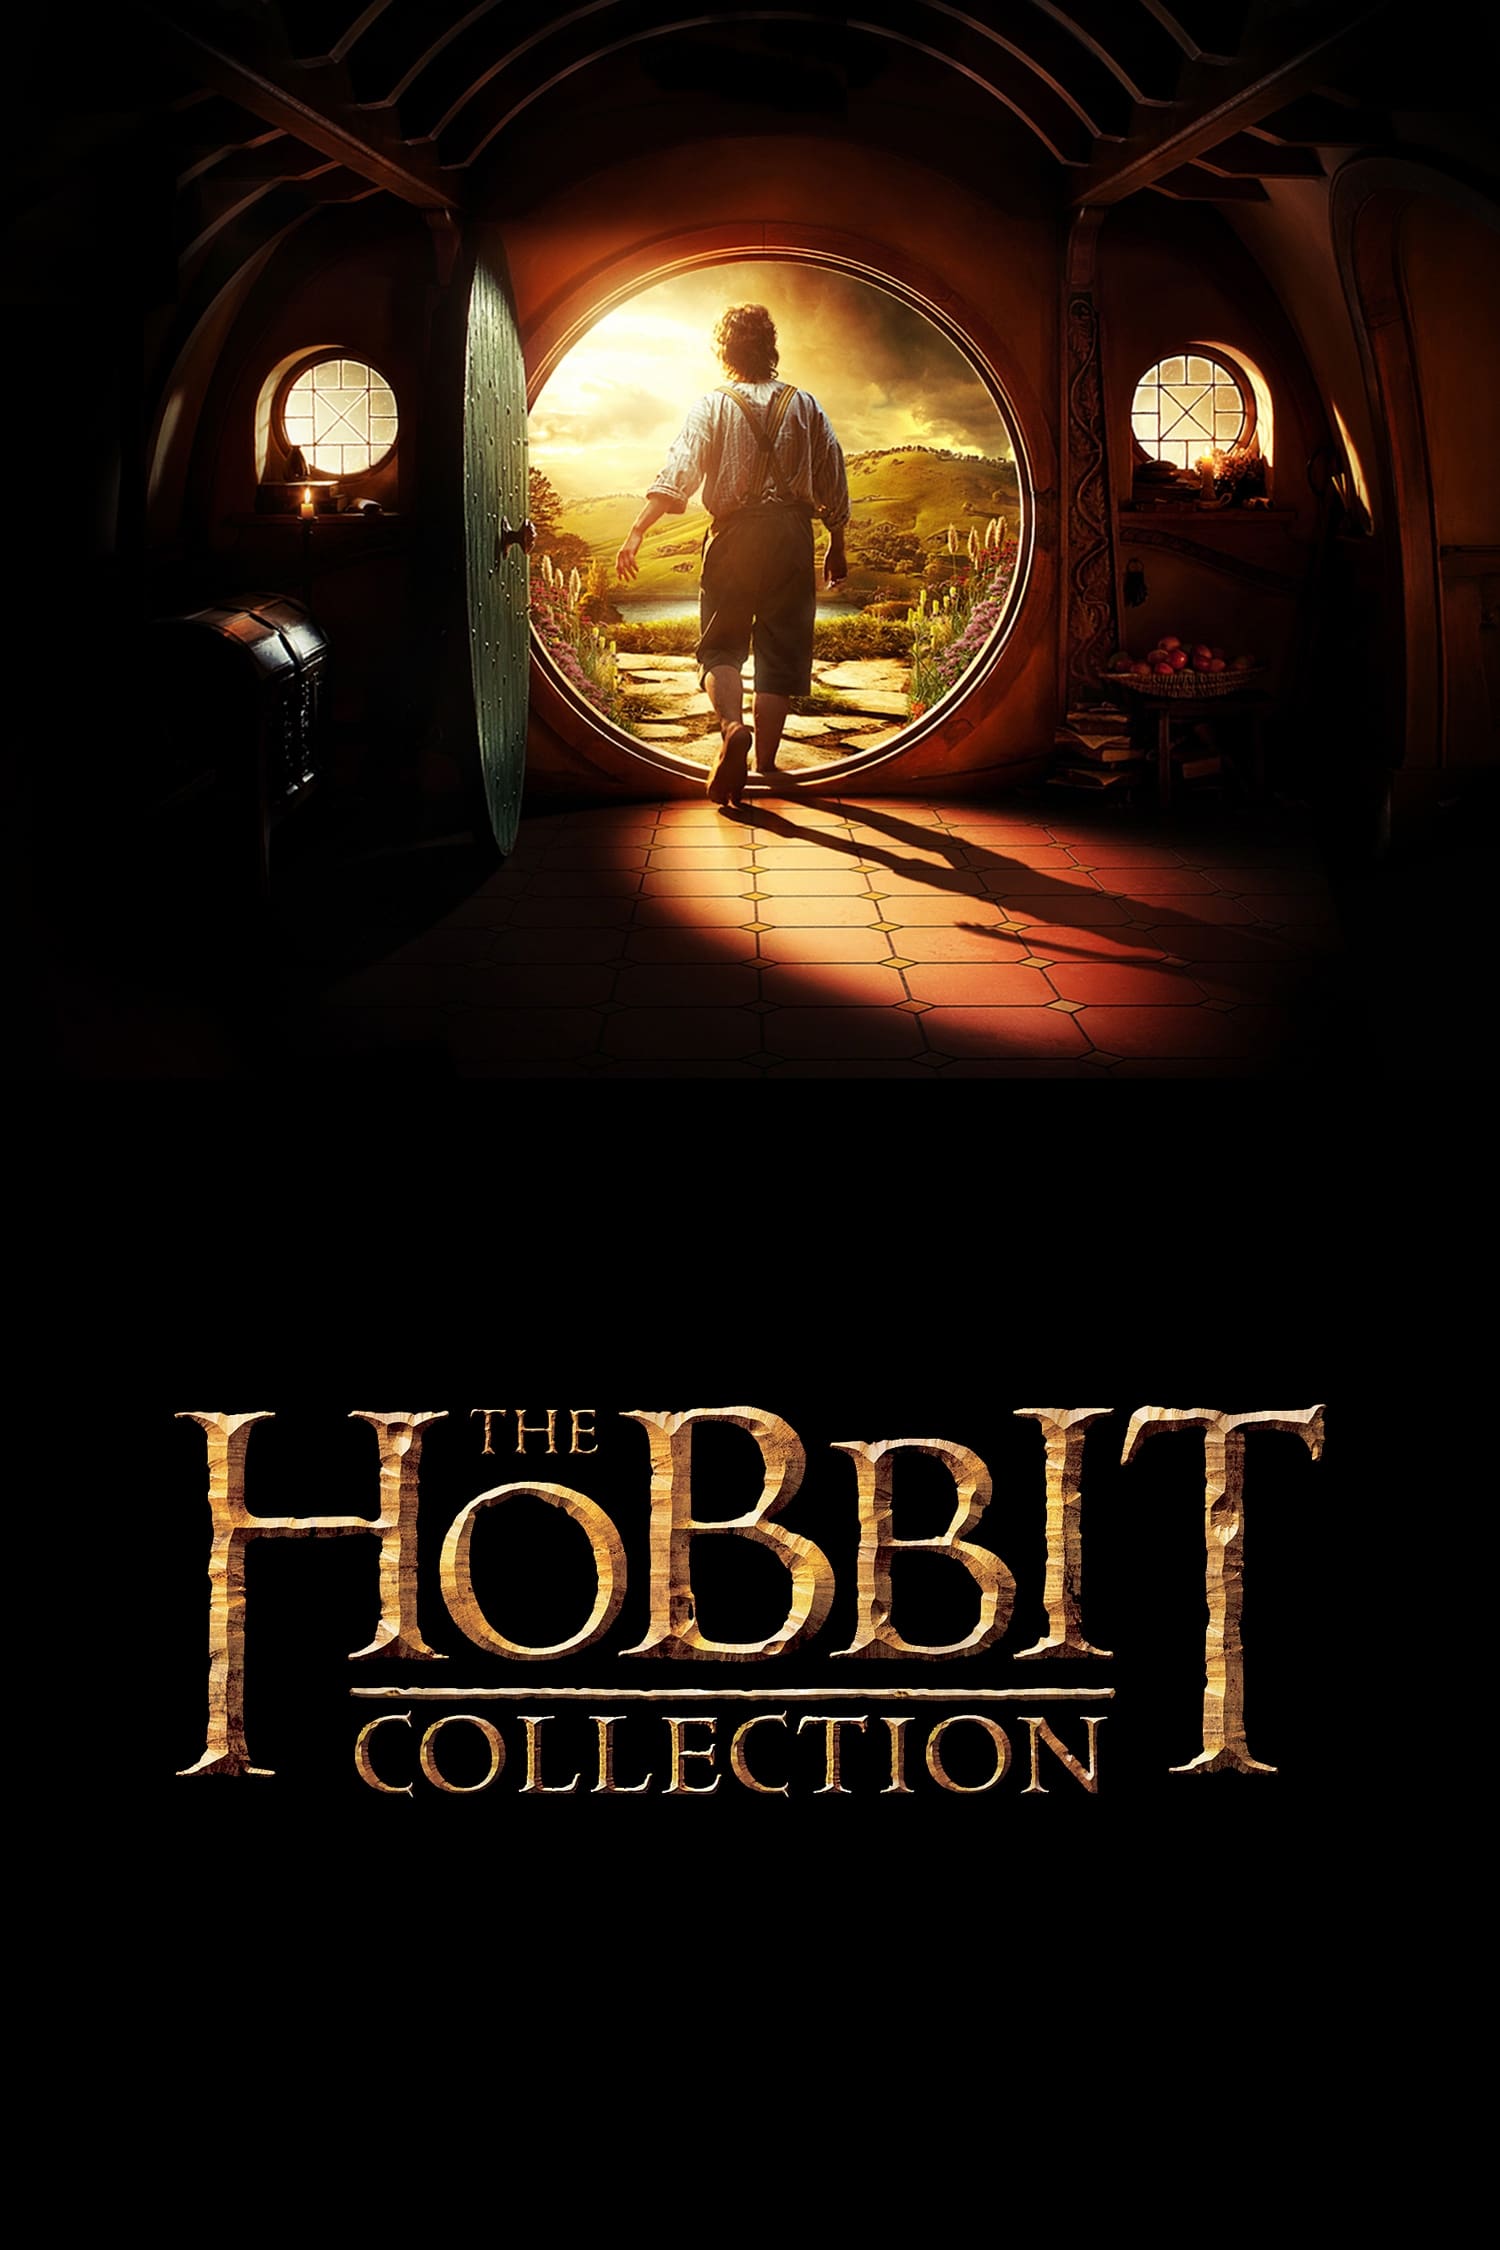 the hobbit an unexpected journey 2012 dual audio 720p download